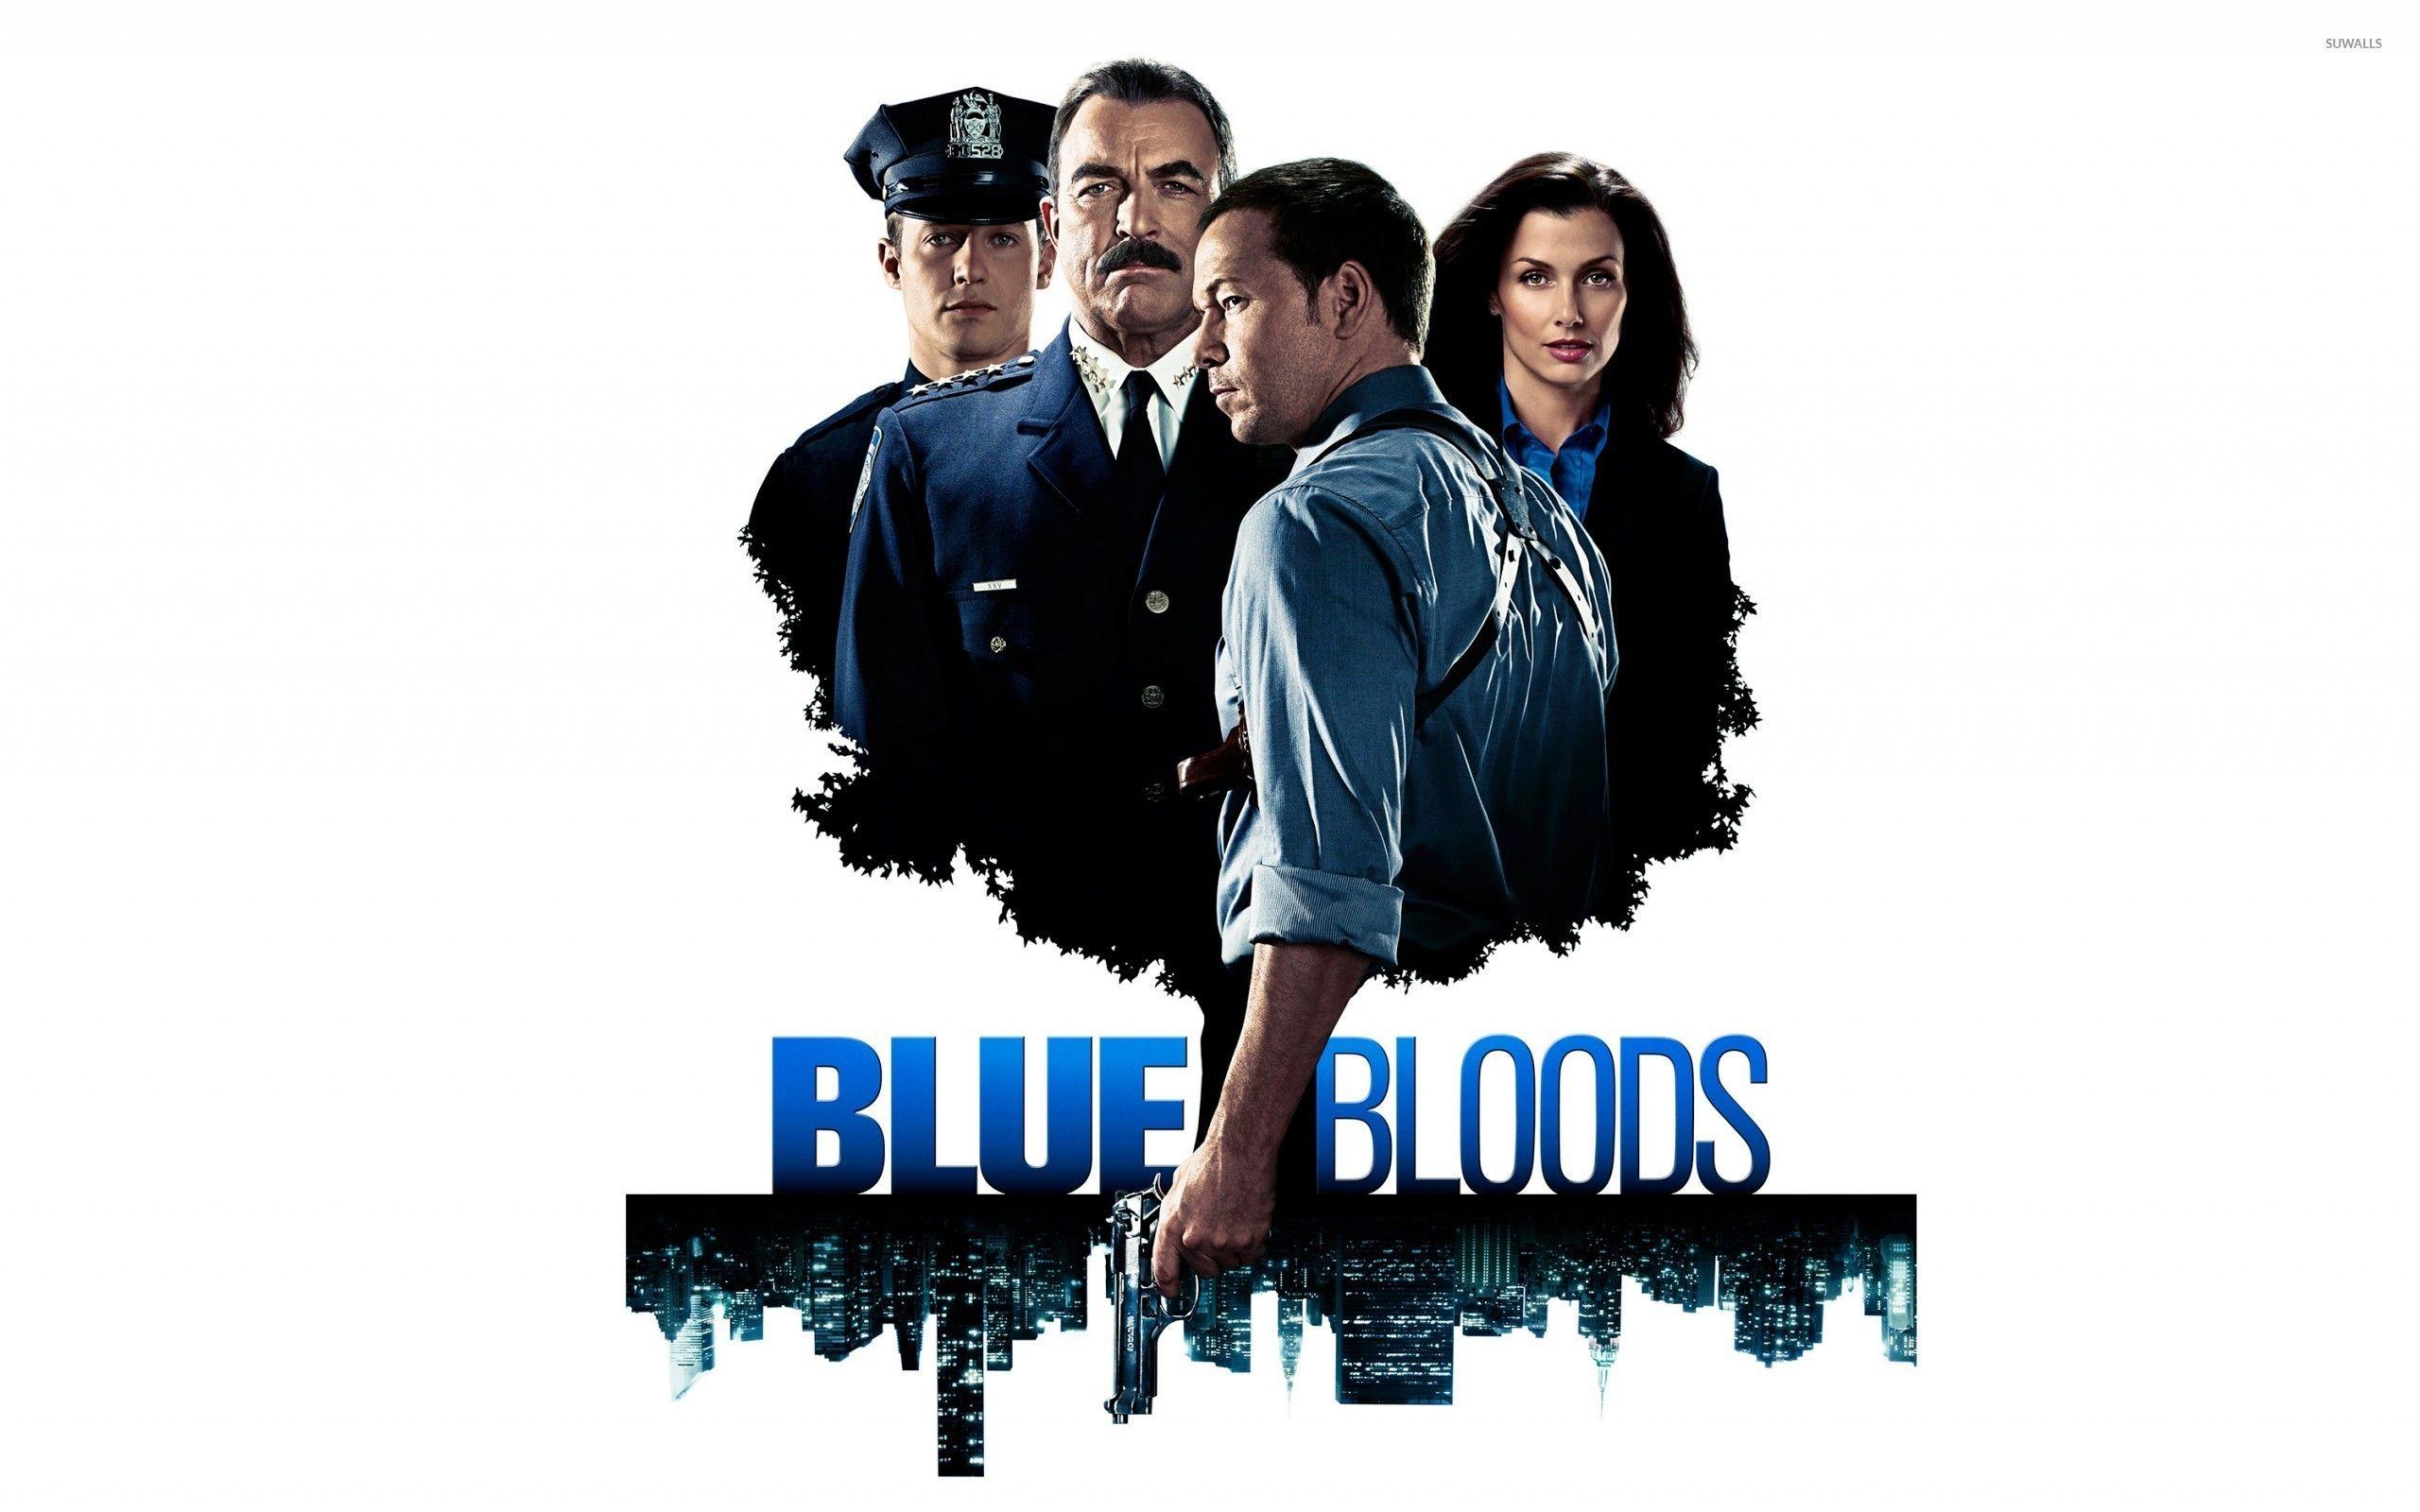 Blue Bloods main characters wallpaper Show wallpaper